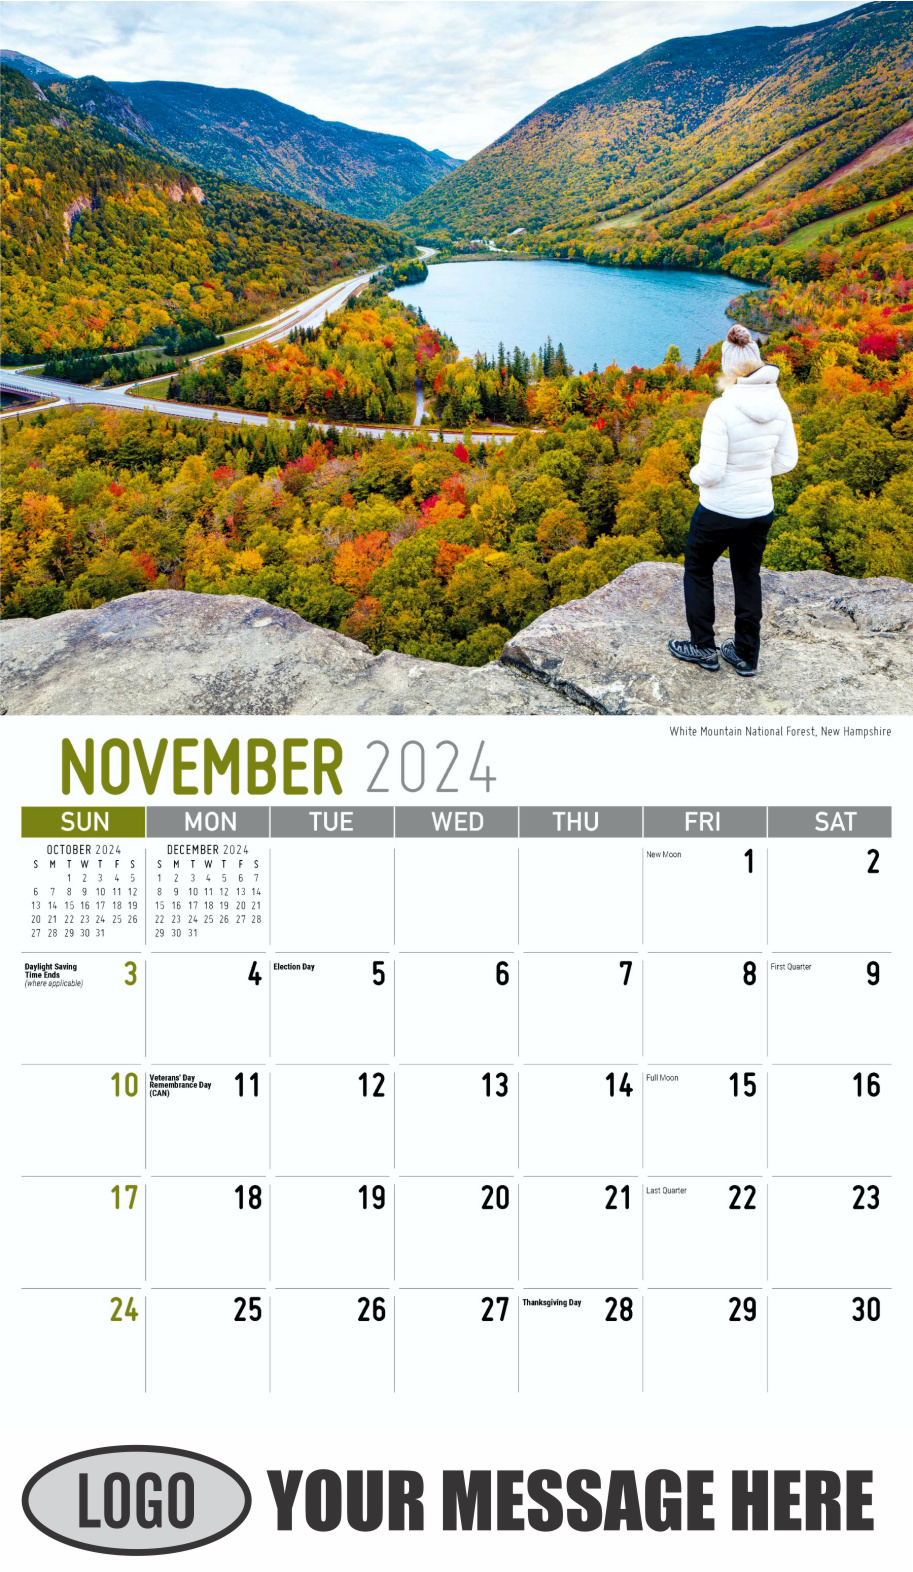 Scenes of New England 2024 Business Advertising Wall Calendar - November